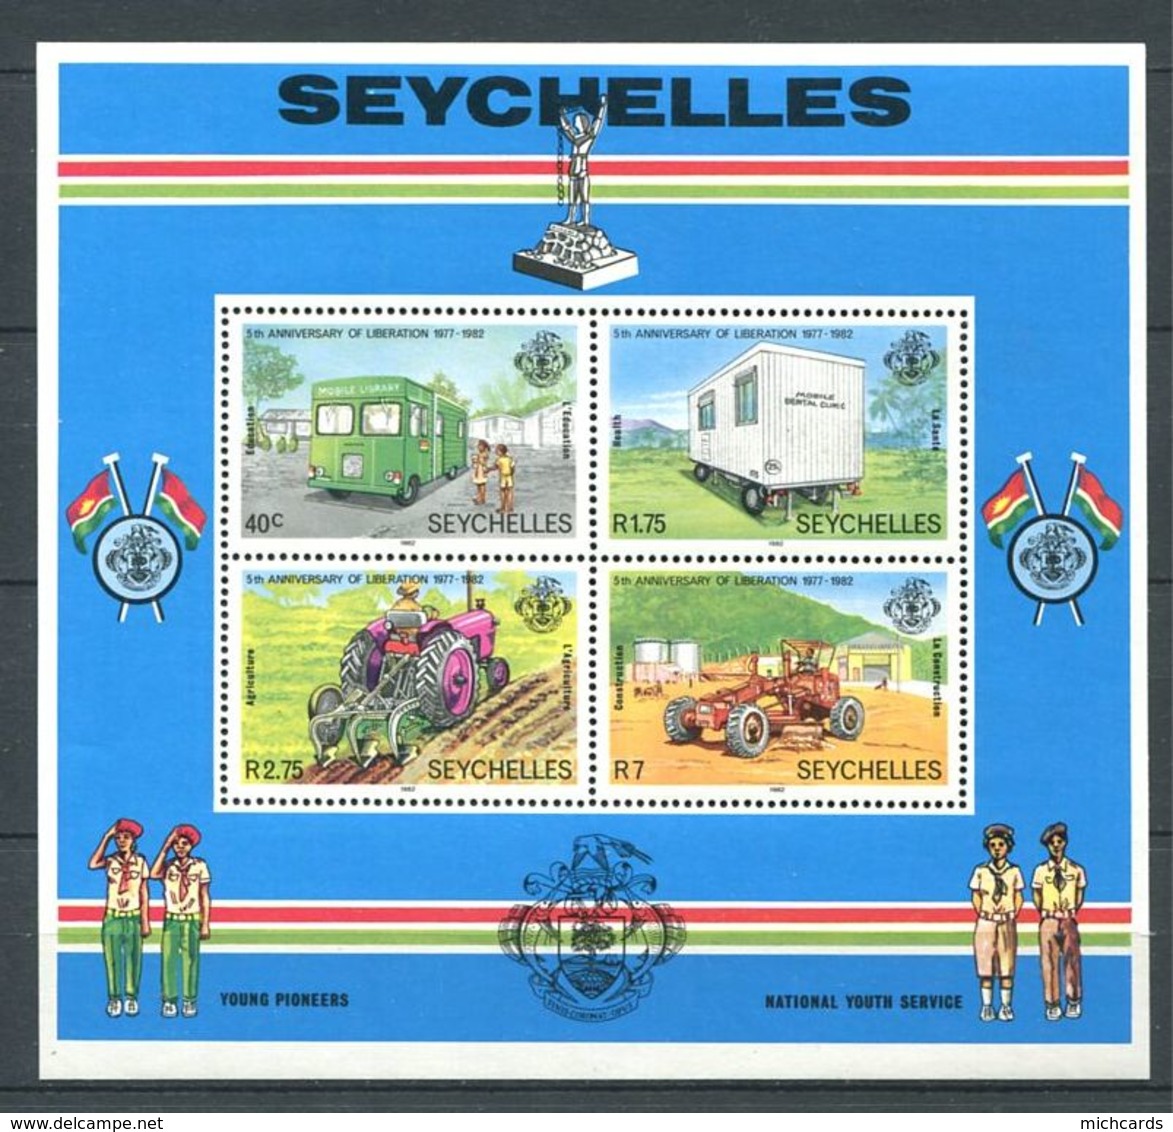 234 SEYCHELLES 1982 - Yvert BF 20 - Vehicule Tracteur - Neuf ** (MNH) Sans Trace De Charniere - Seychelles (1976-...)